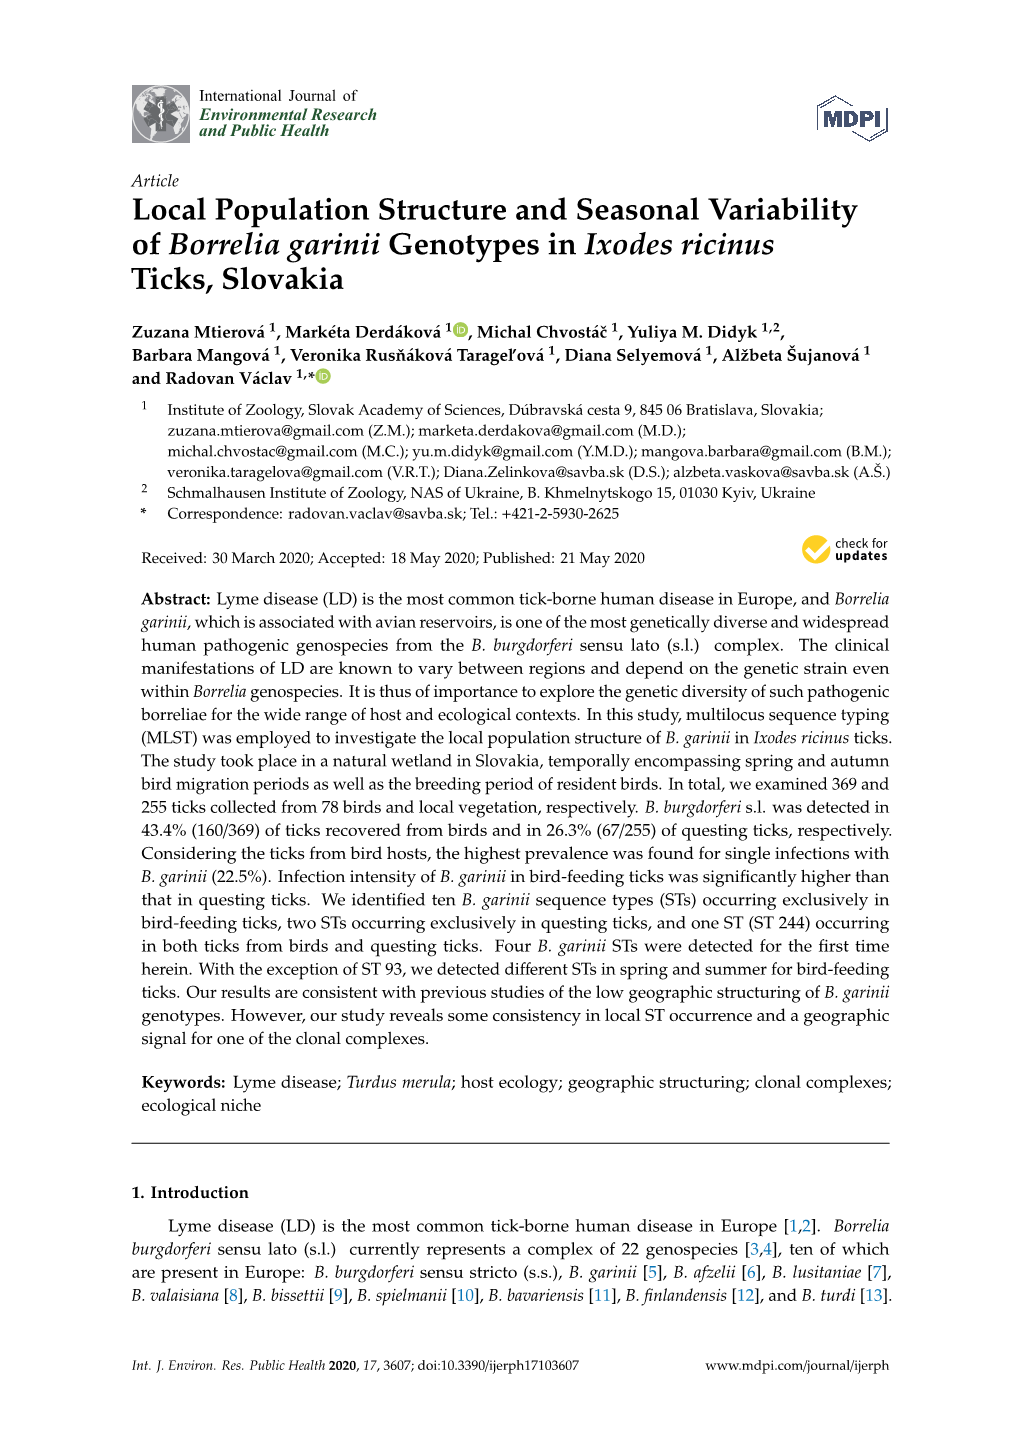 Local Population Structure and Seasonal Variability of Borrelia Garinii Genotypes in Ixodes Ricinus Ticks, Slovakia